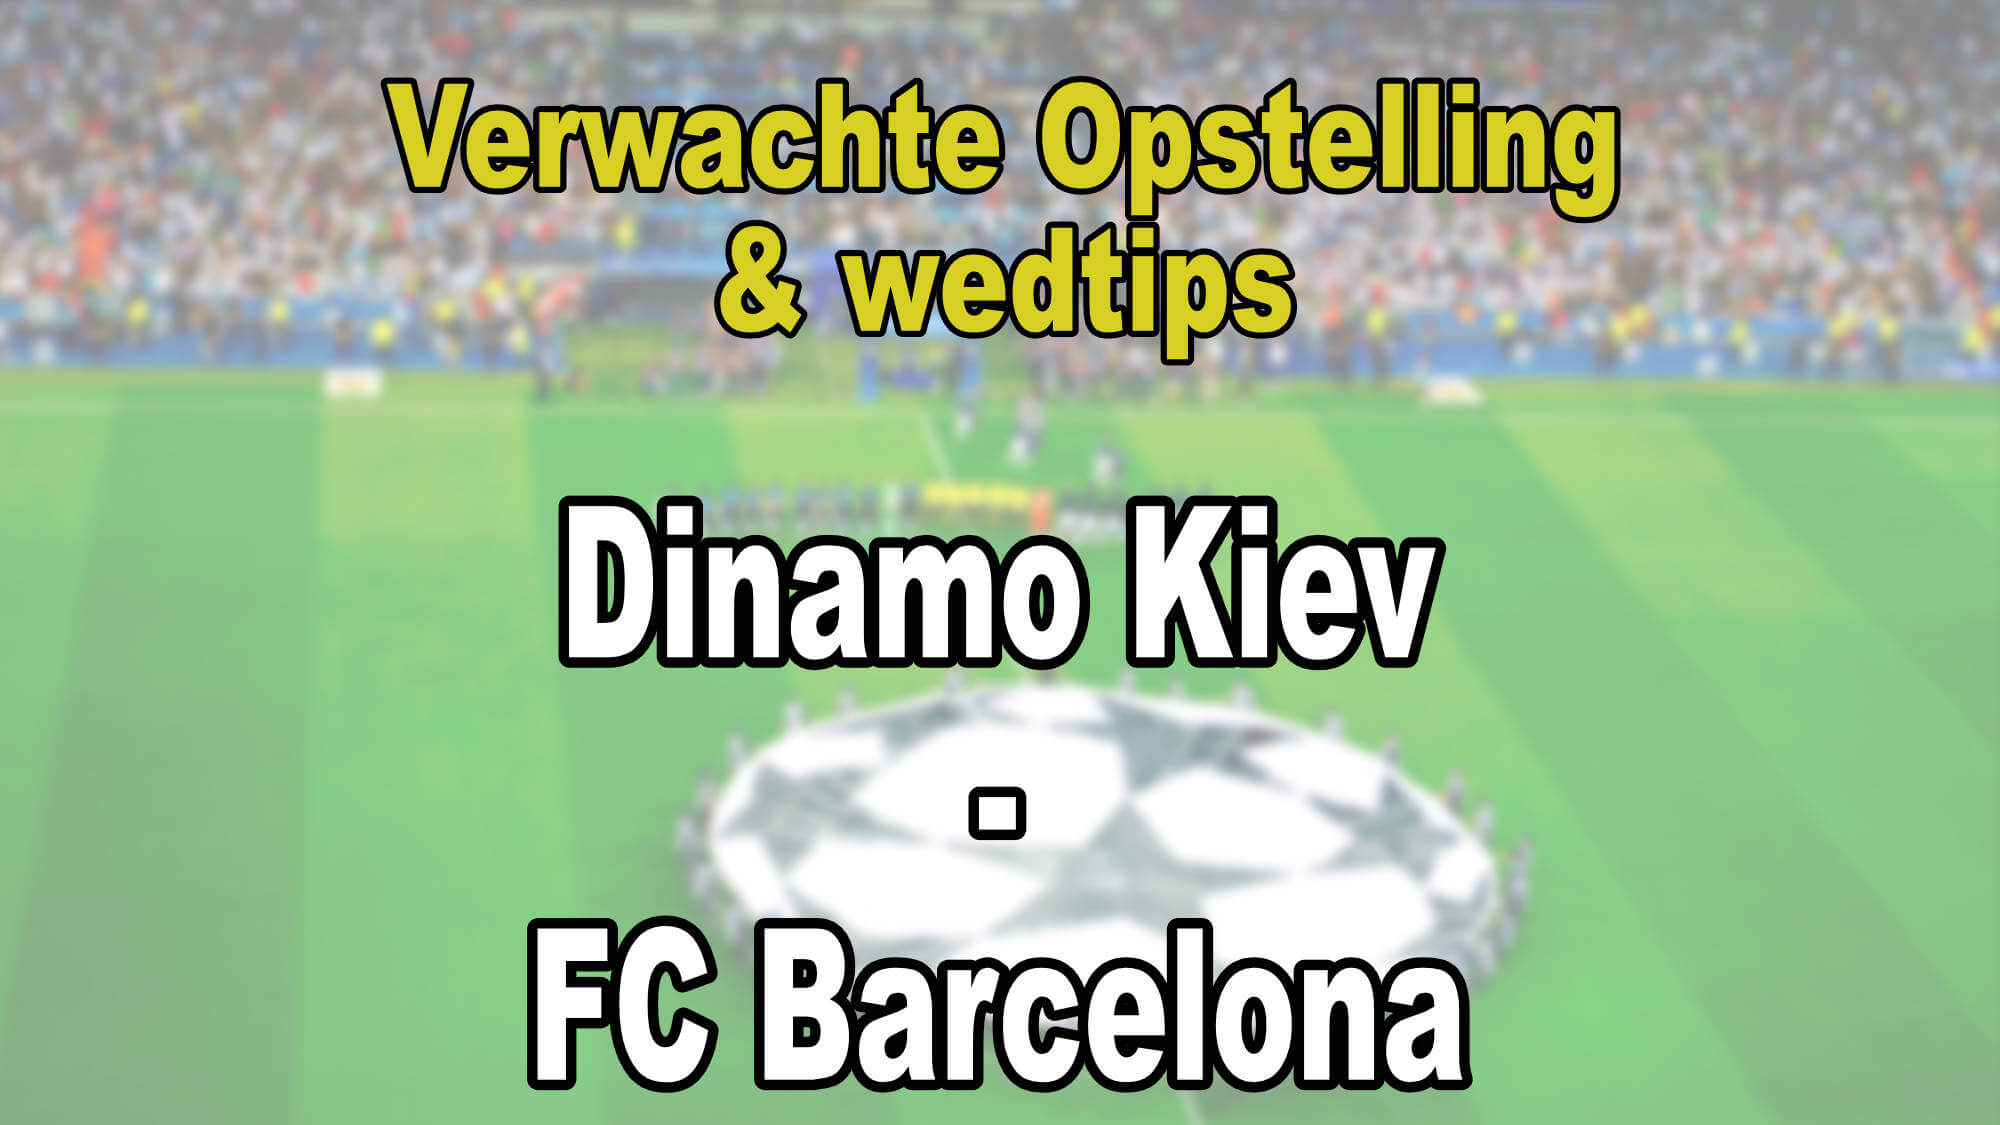 Dinamo Kiev - Barcelona - Verwachte opstelling en wedtips